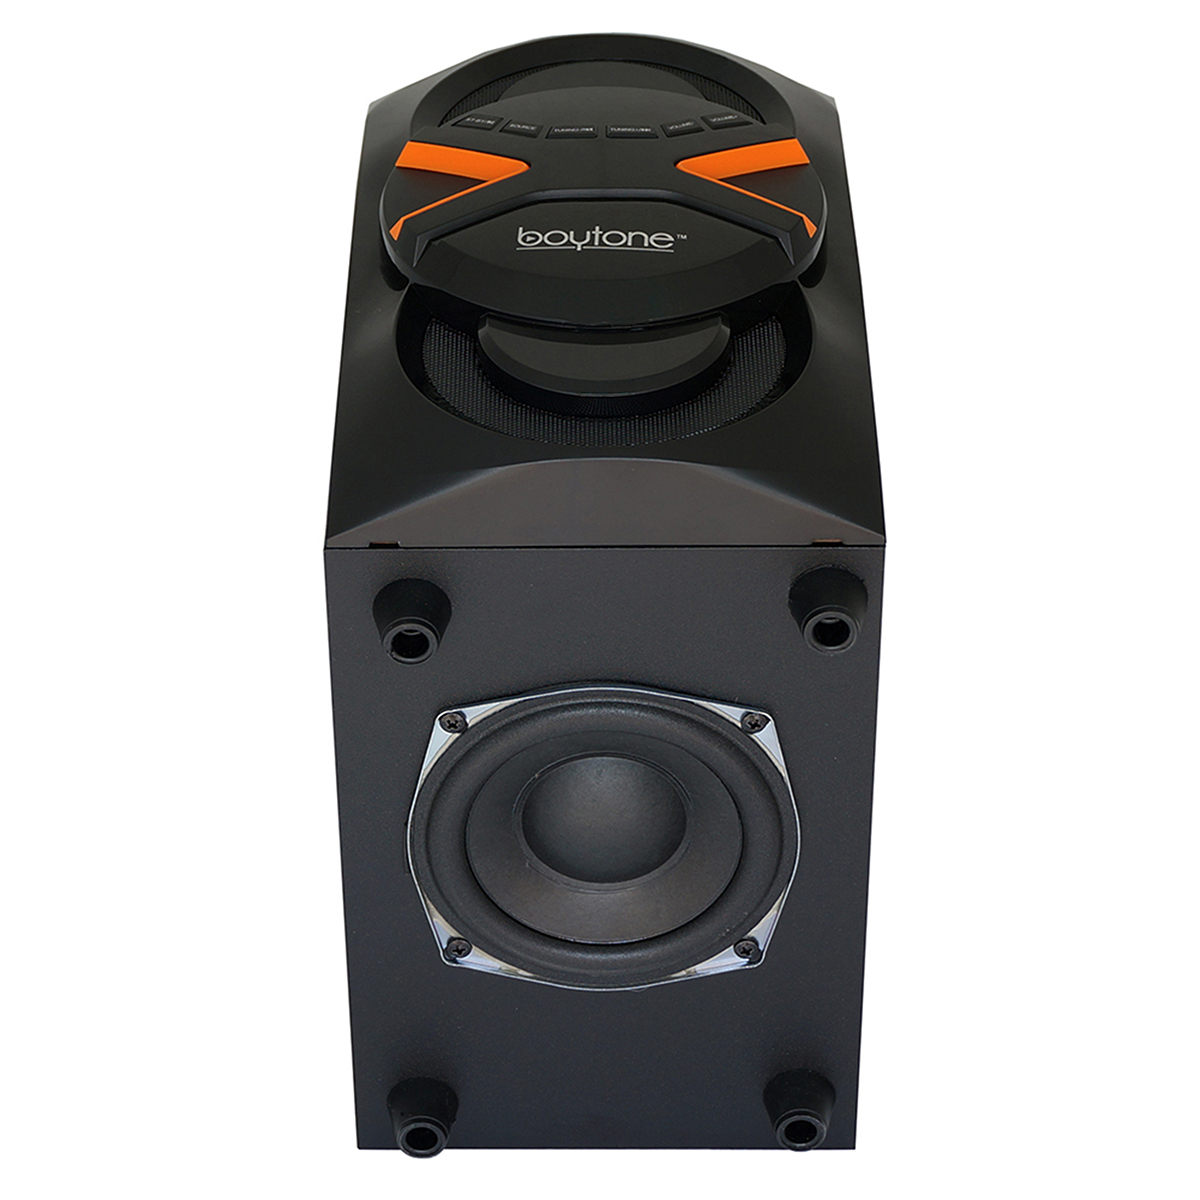 Boytone BT-626F, 2.1 Bluetooth Powerful Home Theater Speaker System, with FM Radio, SD Slot, USB Ports